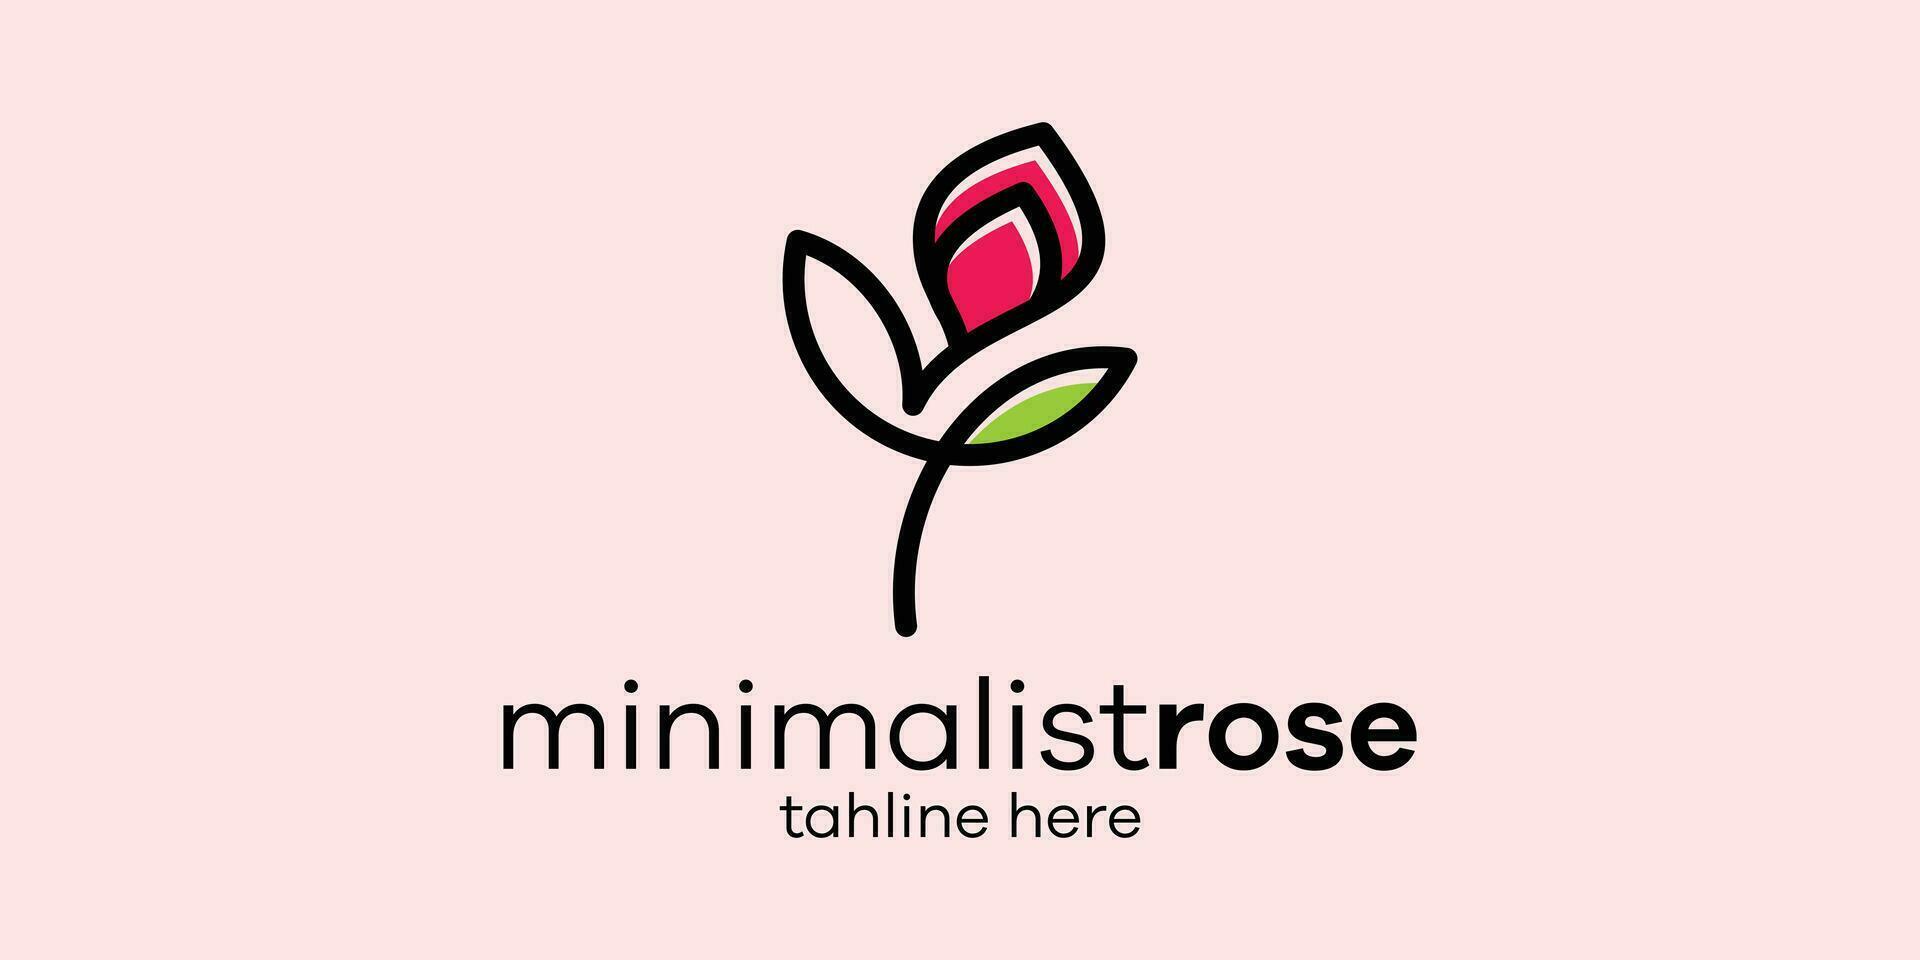 logo design minimalist rose icon vector inspiration